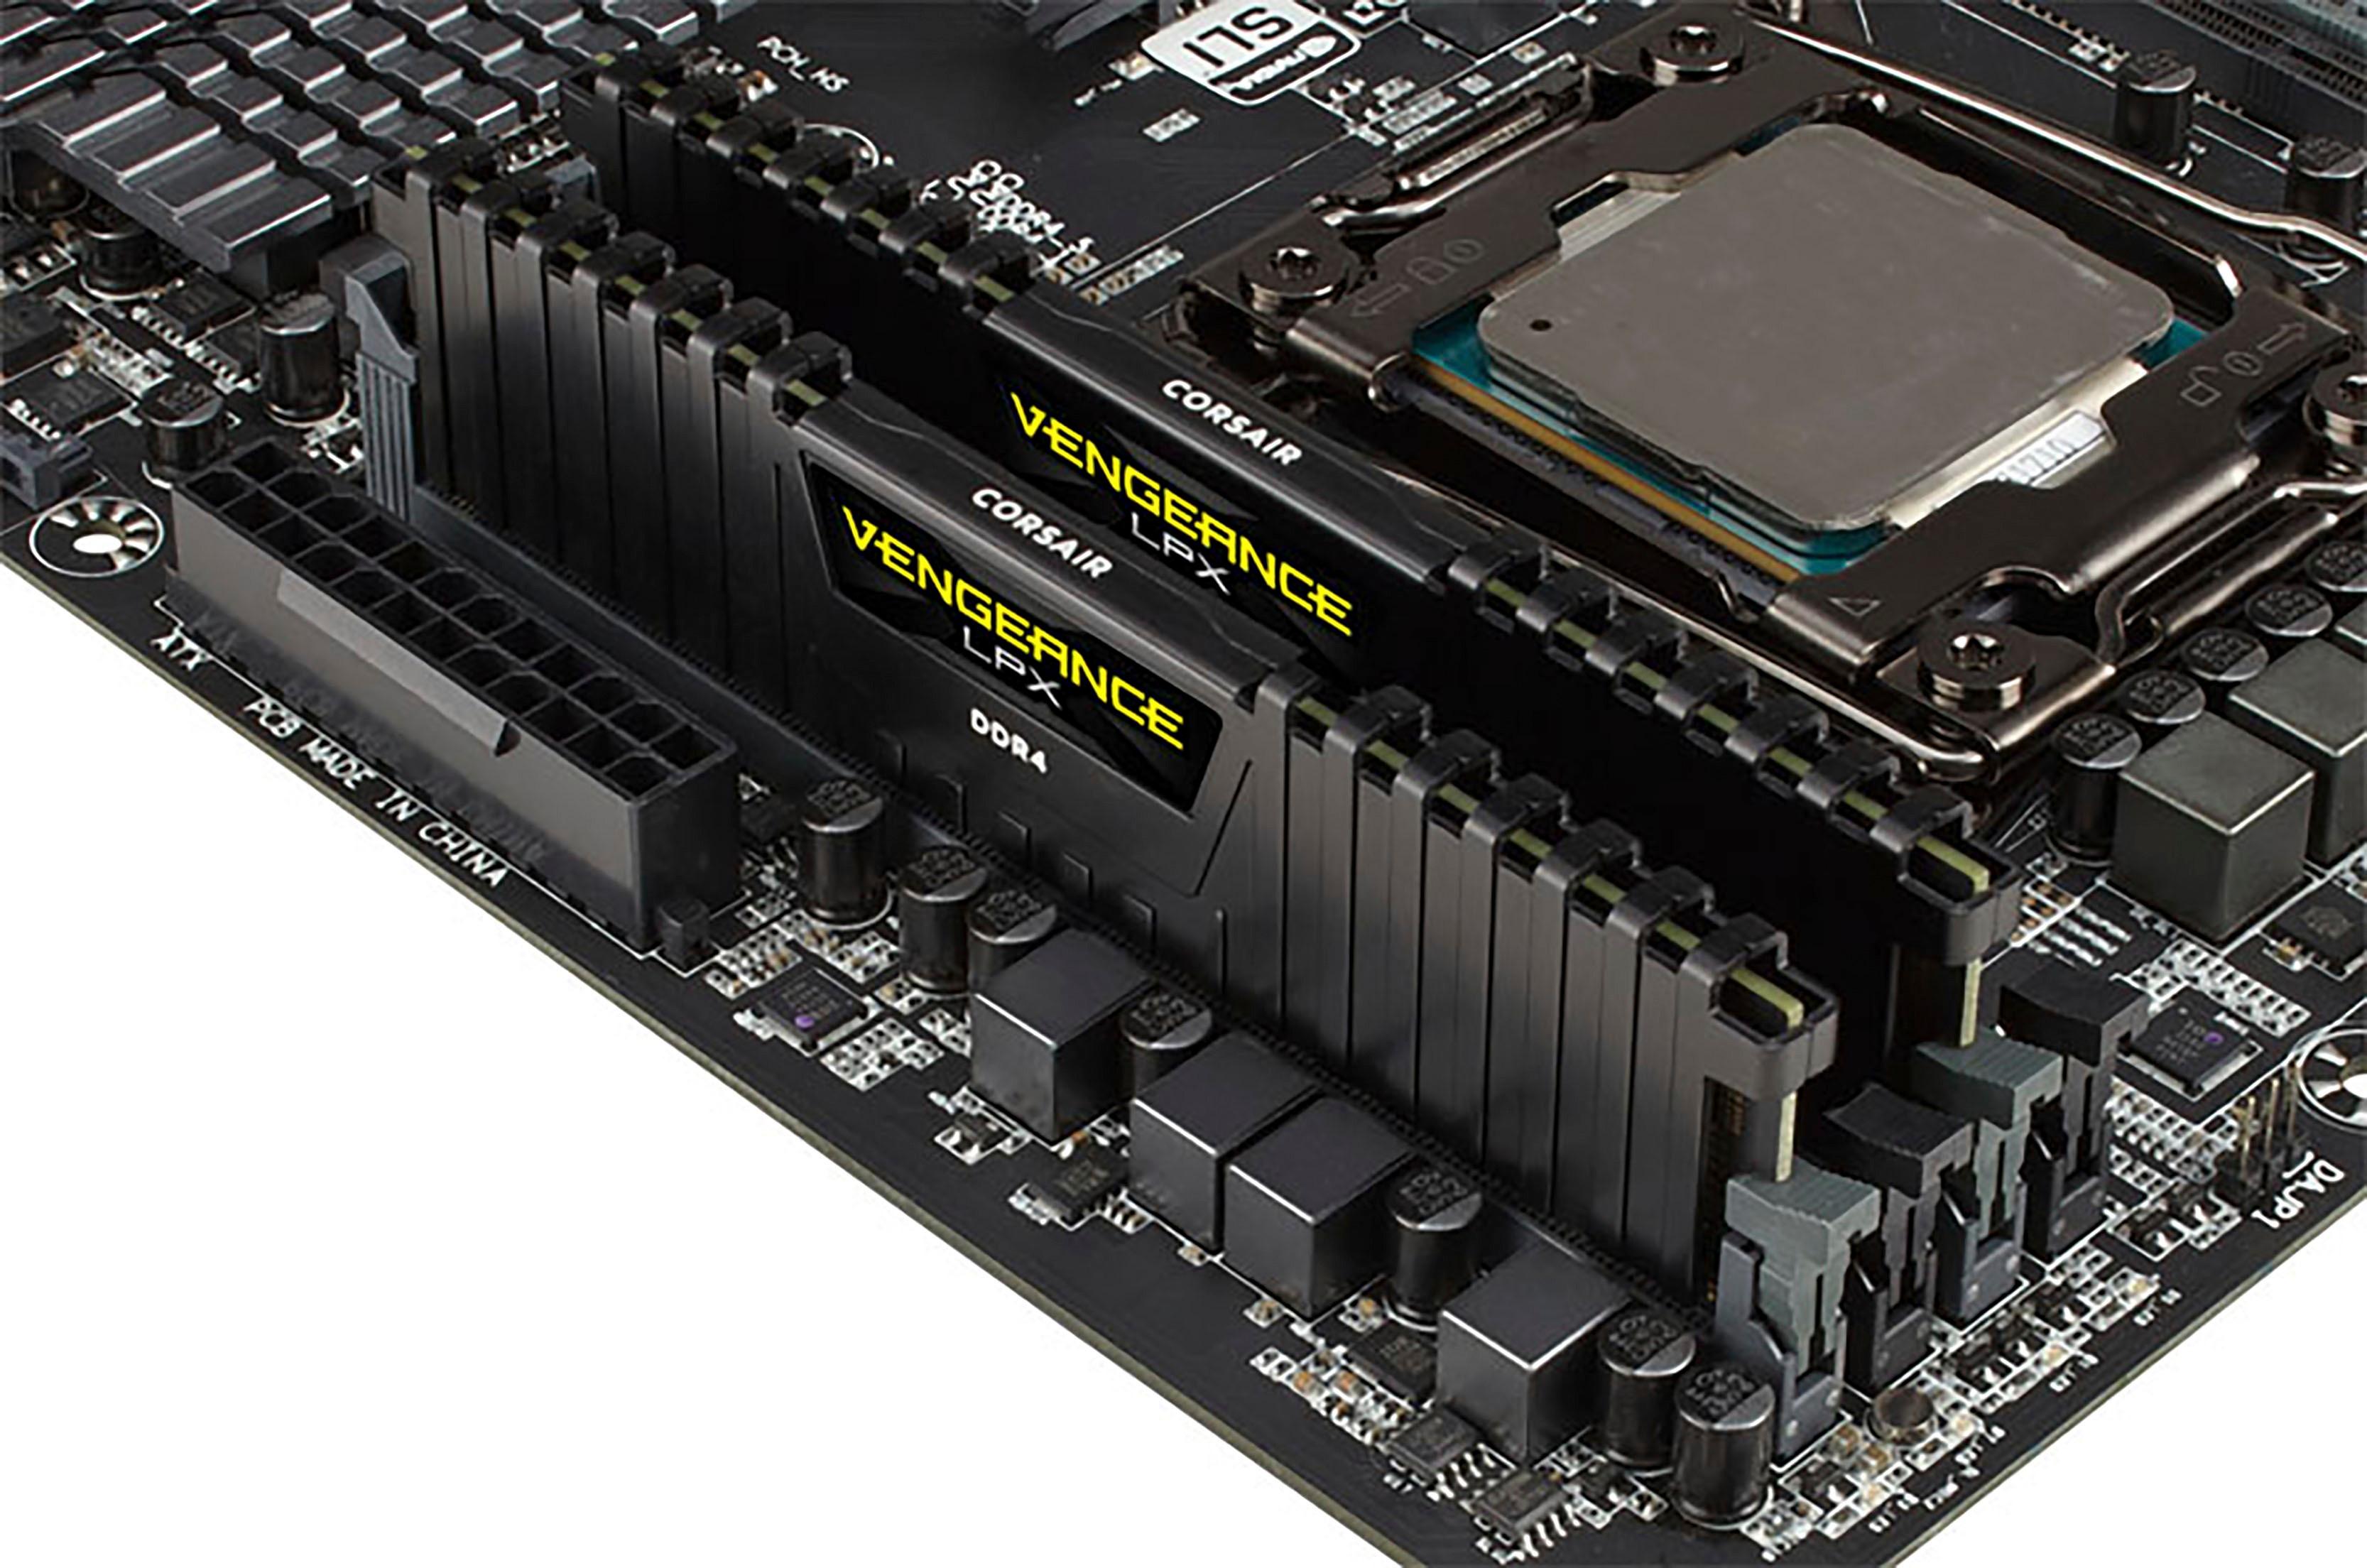 Corsair Vengeance LPX je 2modulová sada 288-pinových operačních pamětí typu DDR4 DIMM s frekvencí až 3 000 MHz a s kapacitou 2x 16 GB.